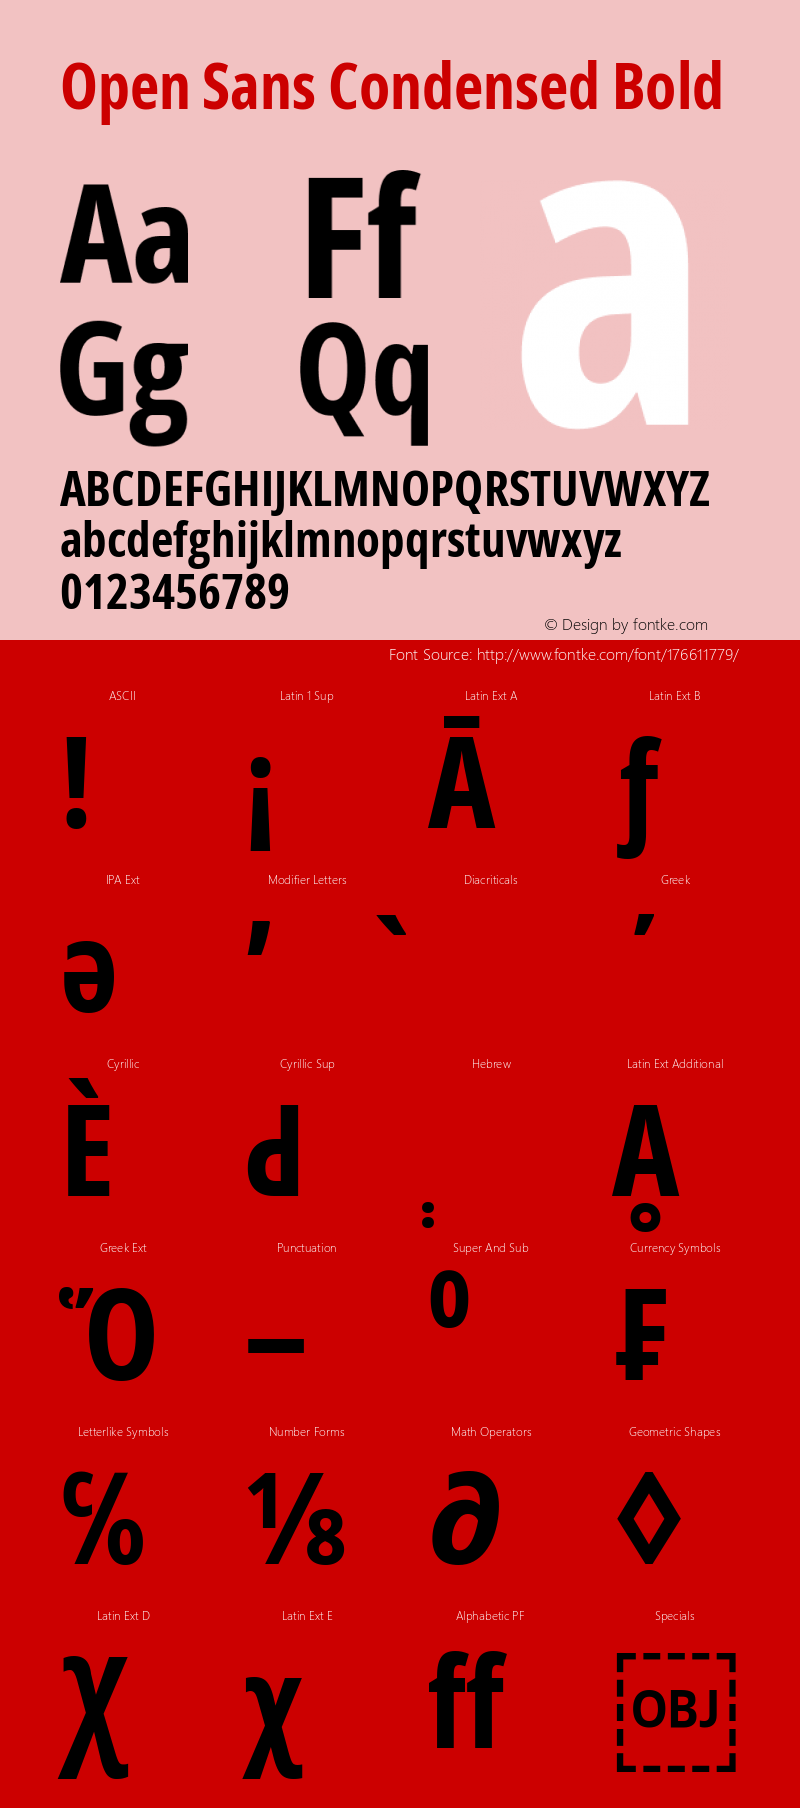 Open Sans Condensed Bold Version 3.000; ttfautohint (v1.8.3)图片样张